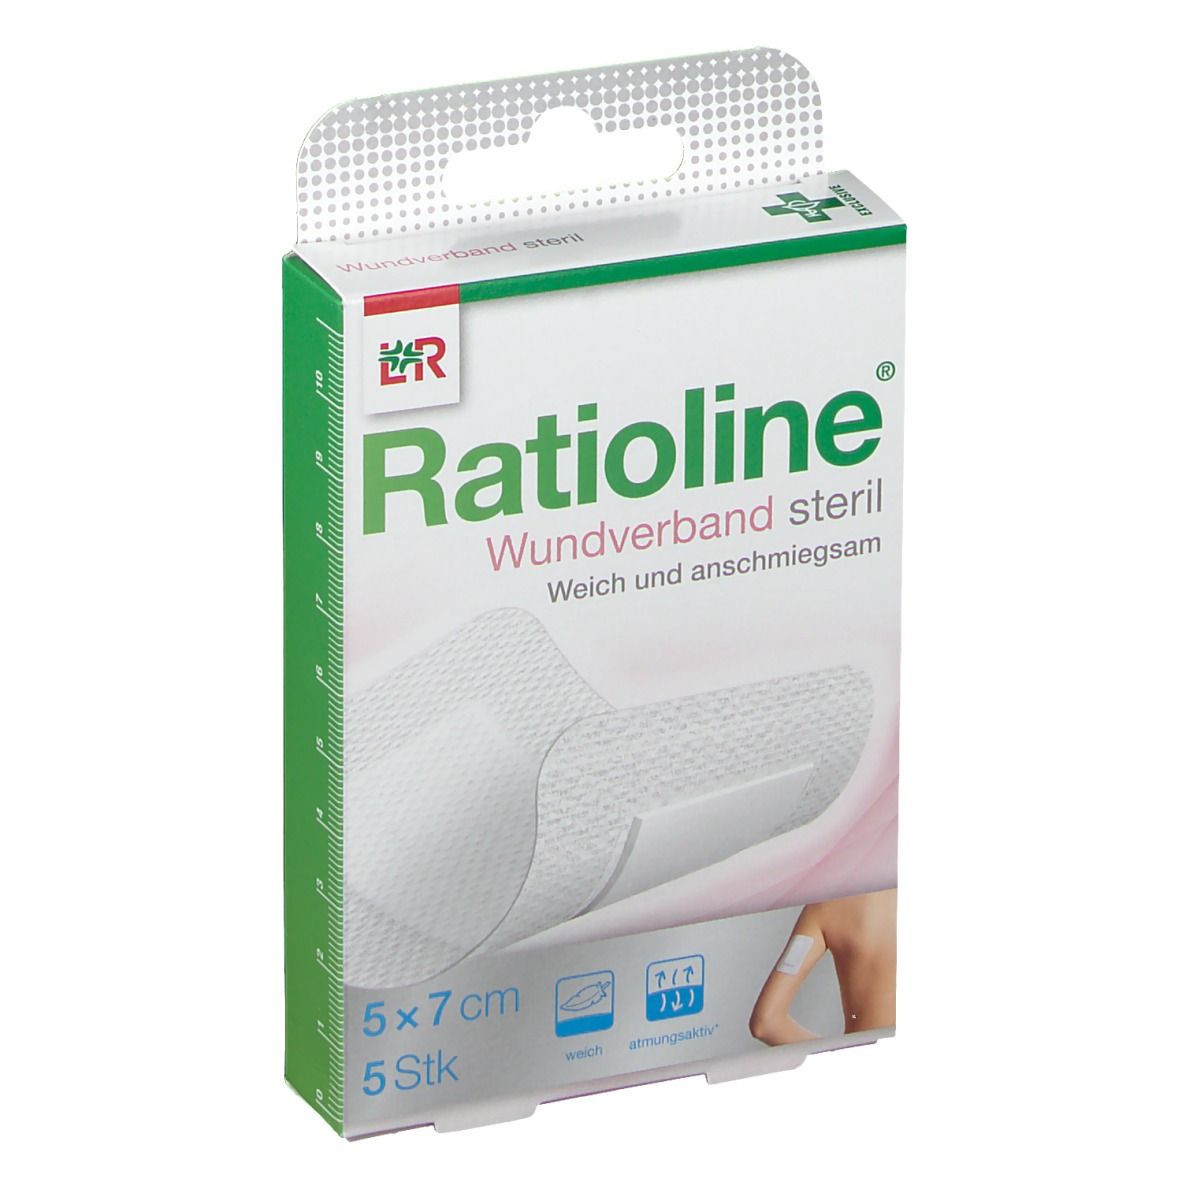 Ratioline® Wundverband steril 7 x 5 cm